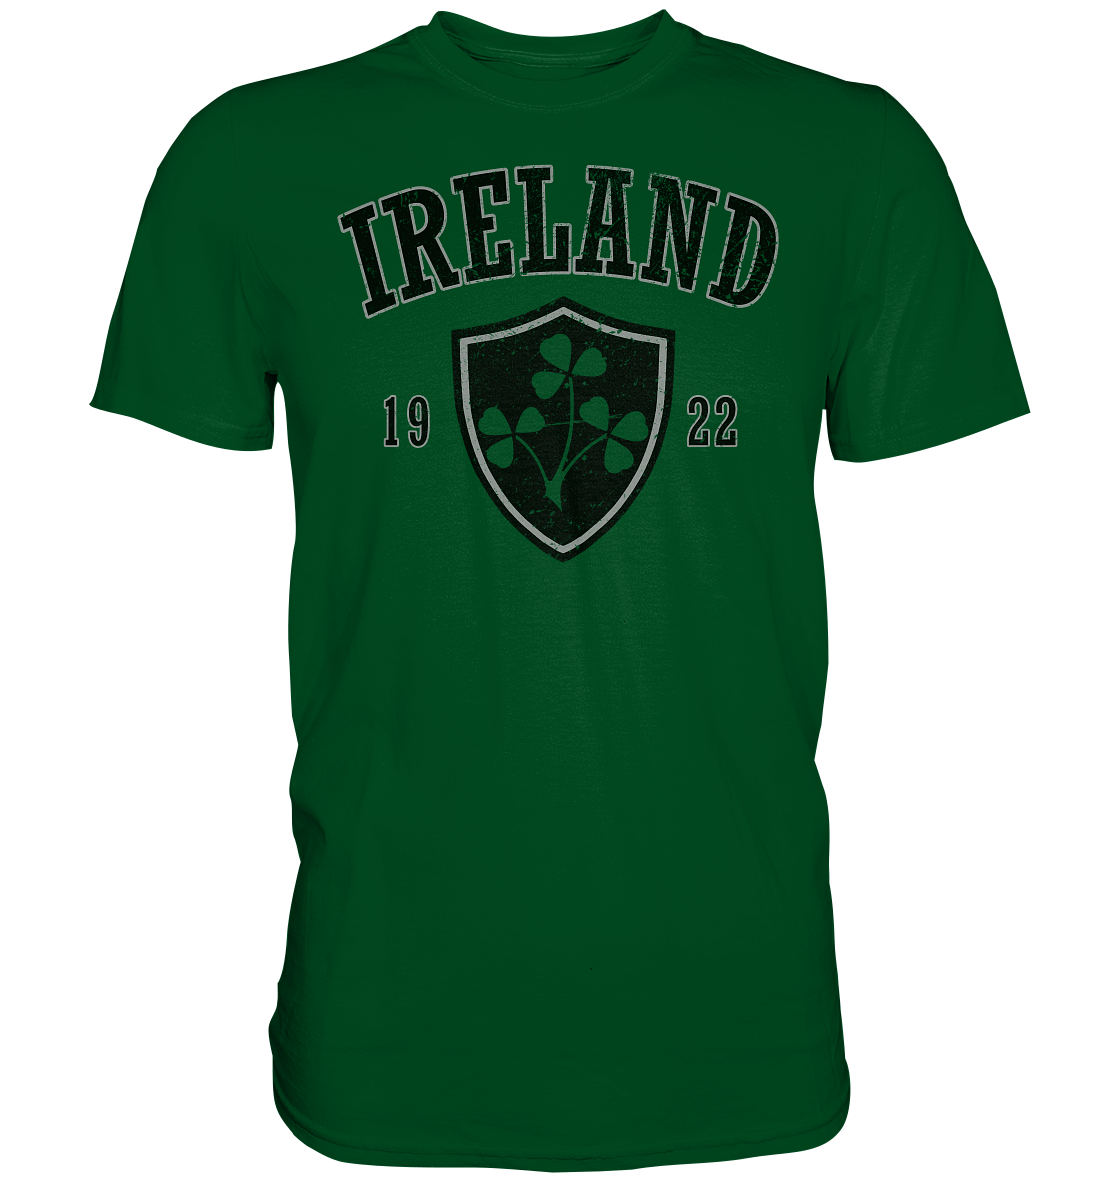 Ireland "Crest 1922" - Premium Shirt